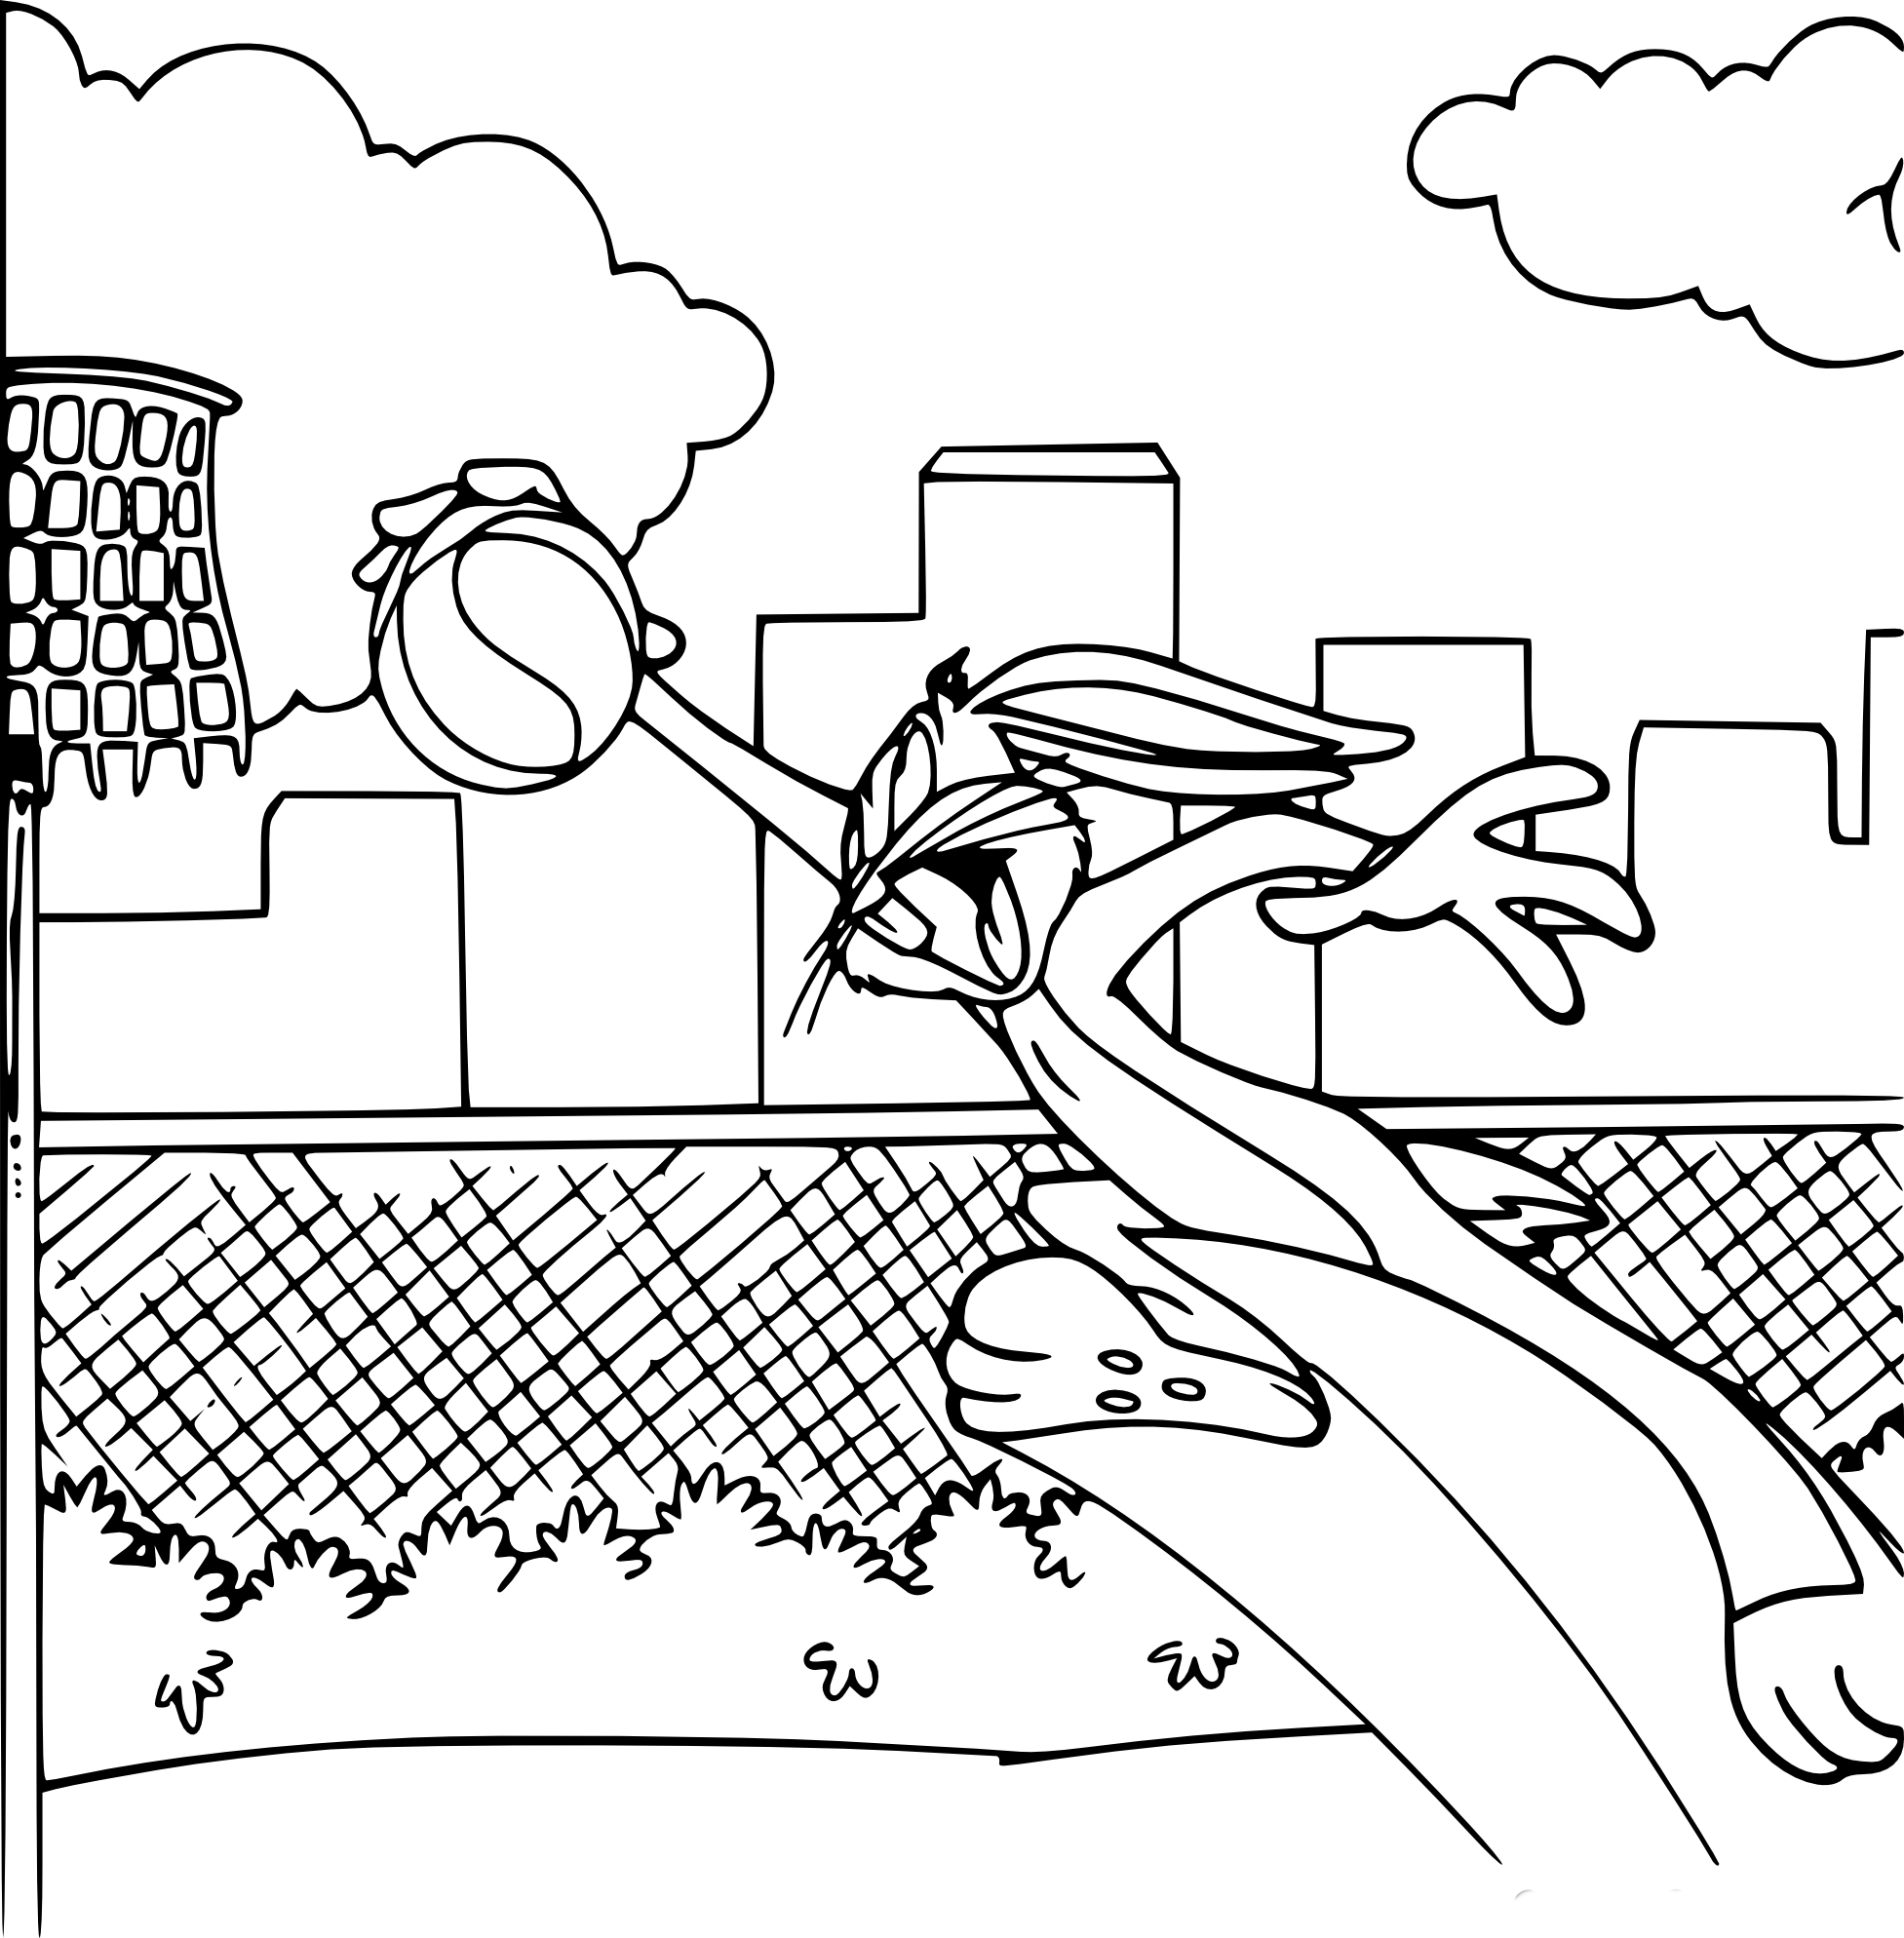 Bugs Bunny Basketball coloring page